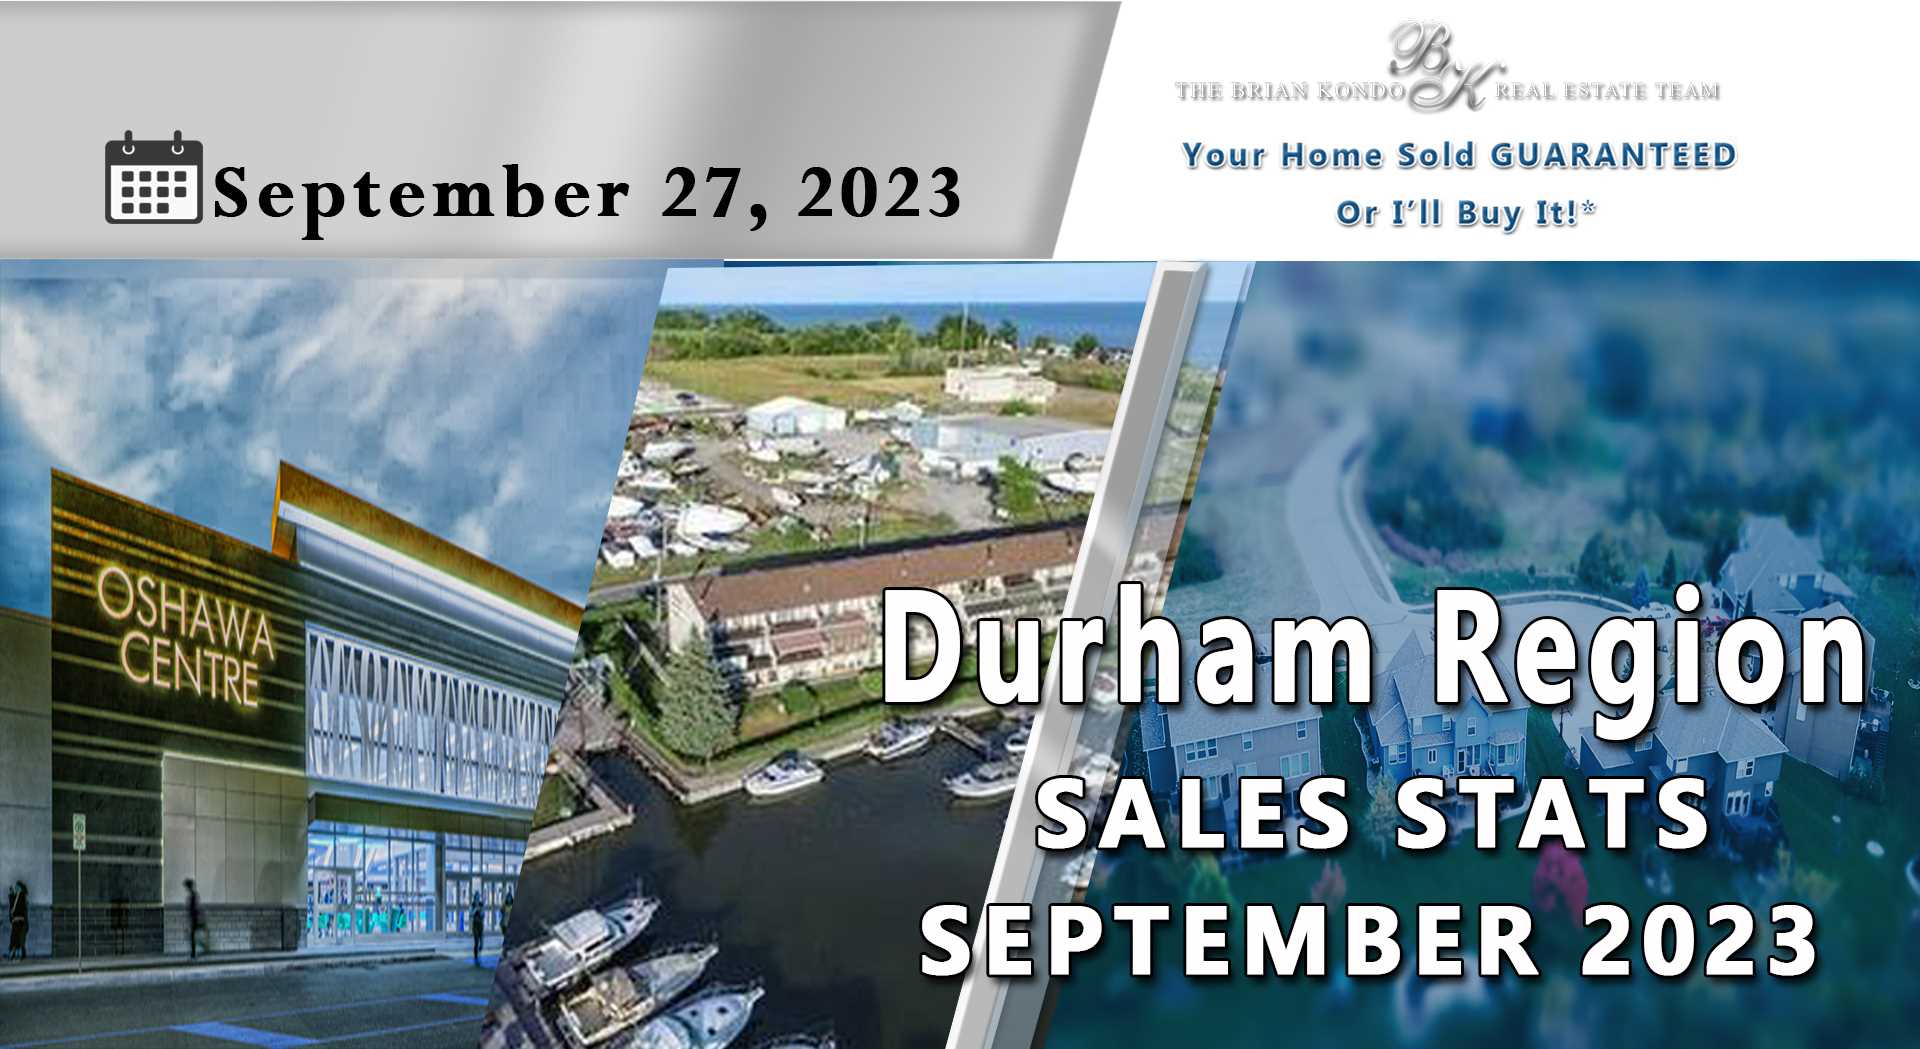 DURHAM REGION SALES STATS SEPTEMBER 2023